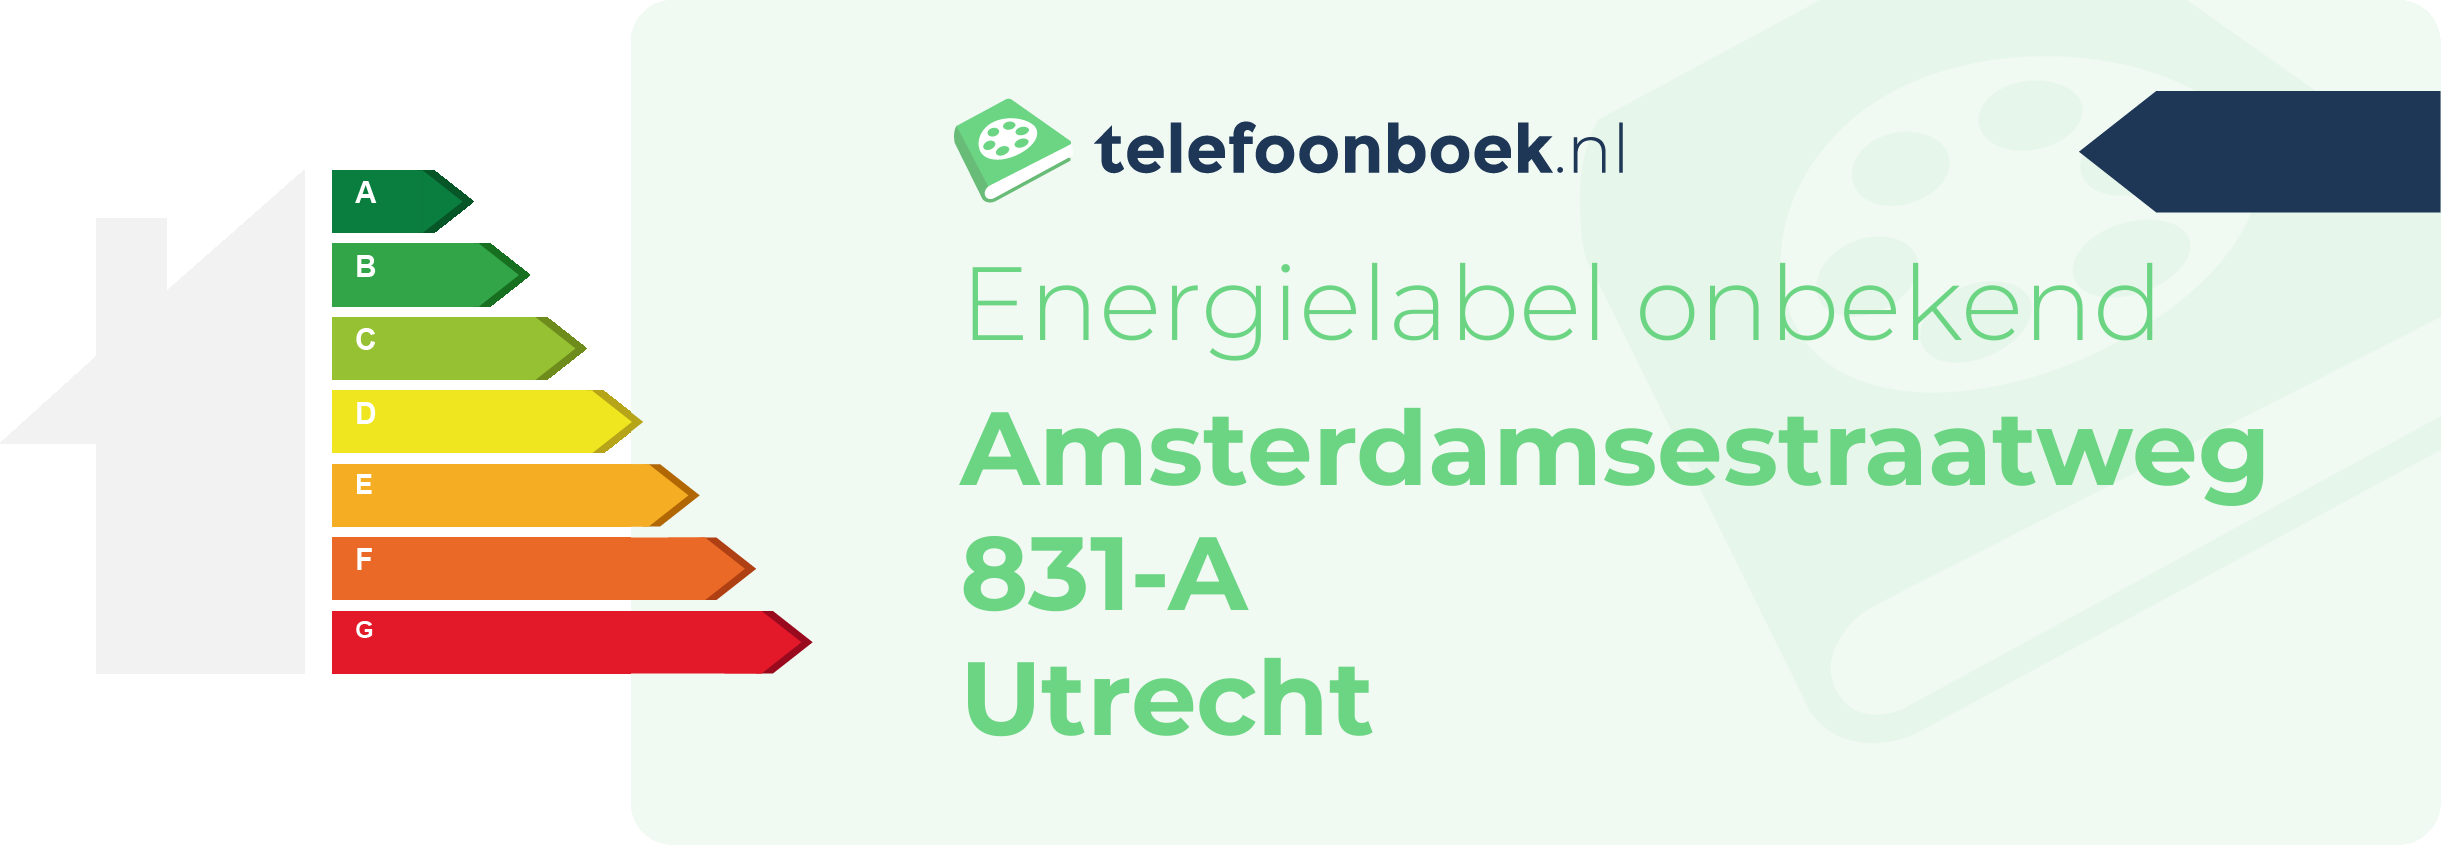 Energielabel Amsterdamsestraatweg 831-A Utrecht